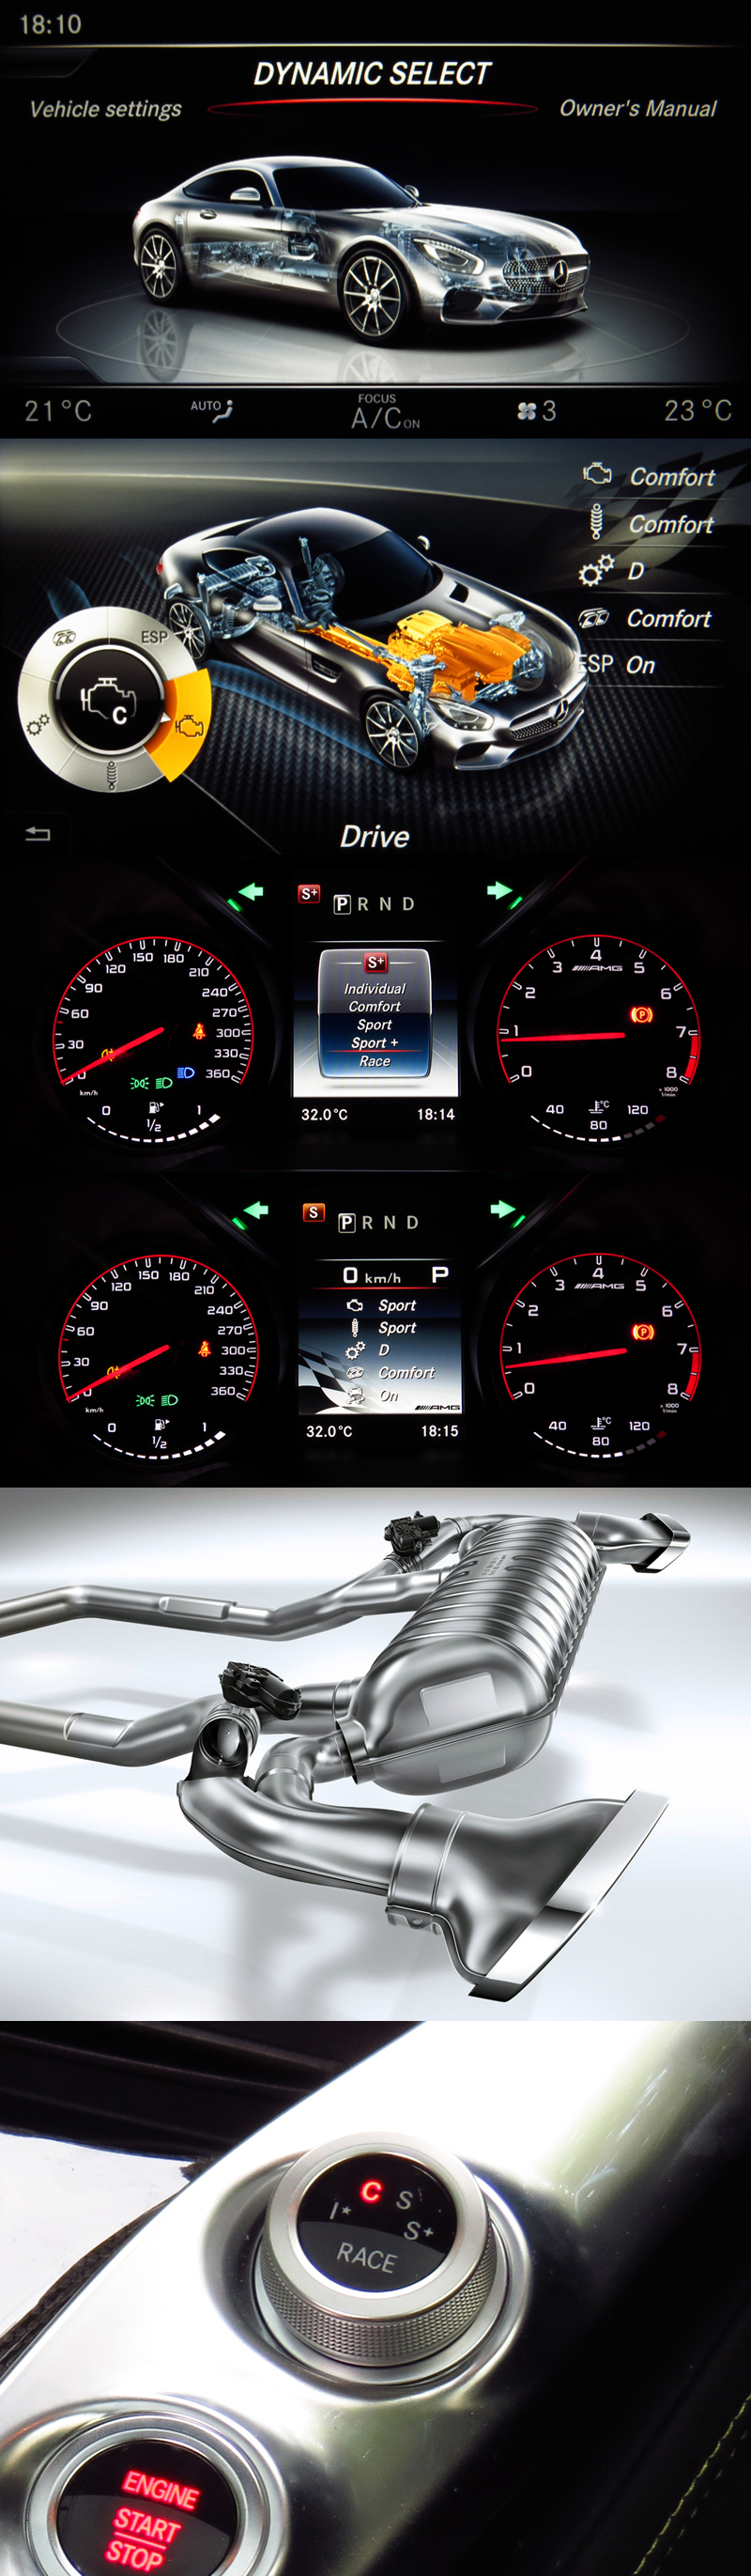 2015_08_Mercedes_Benz_AMG_GT_S_Engine_04_AMG_Dynamic_Select_EDIT